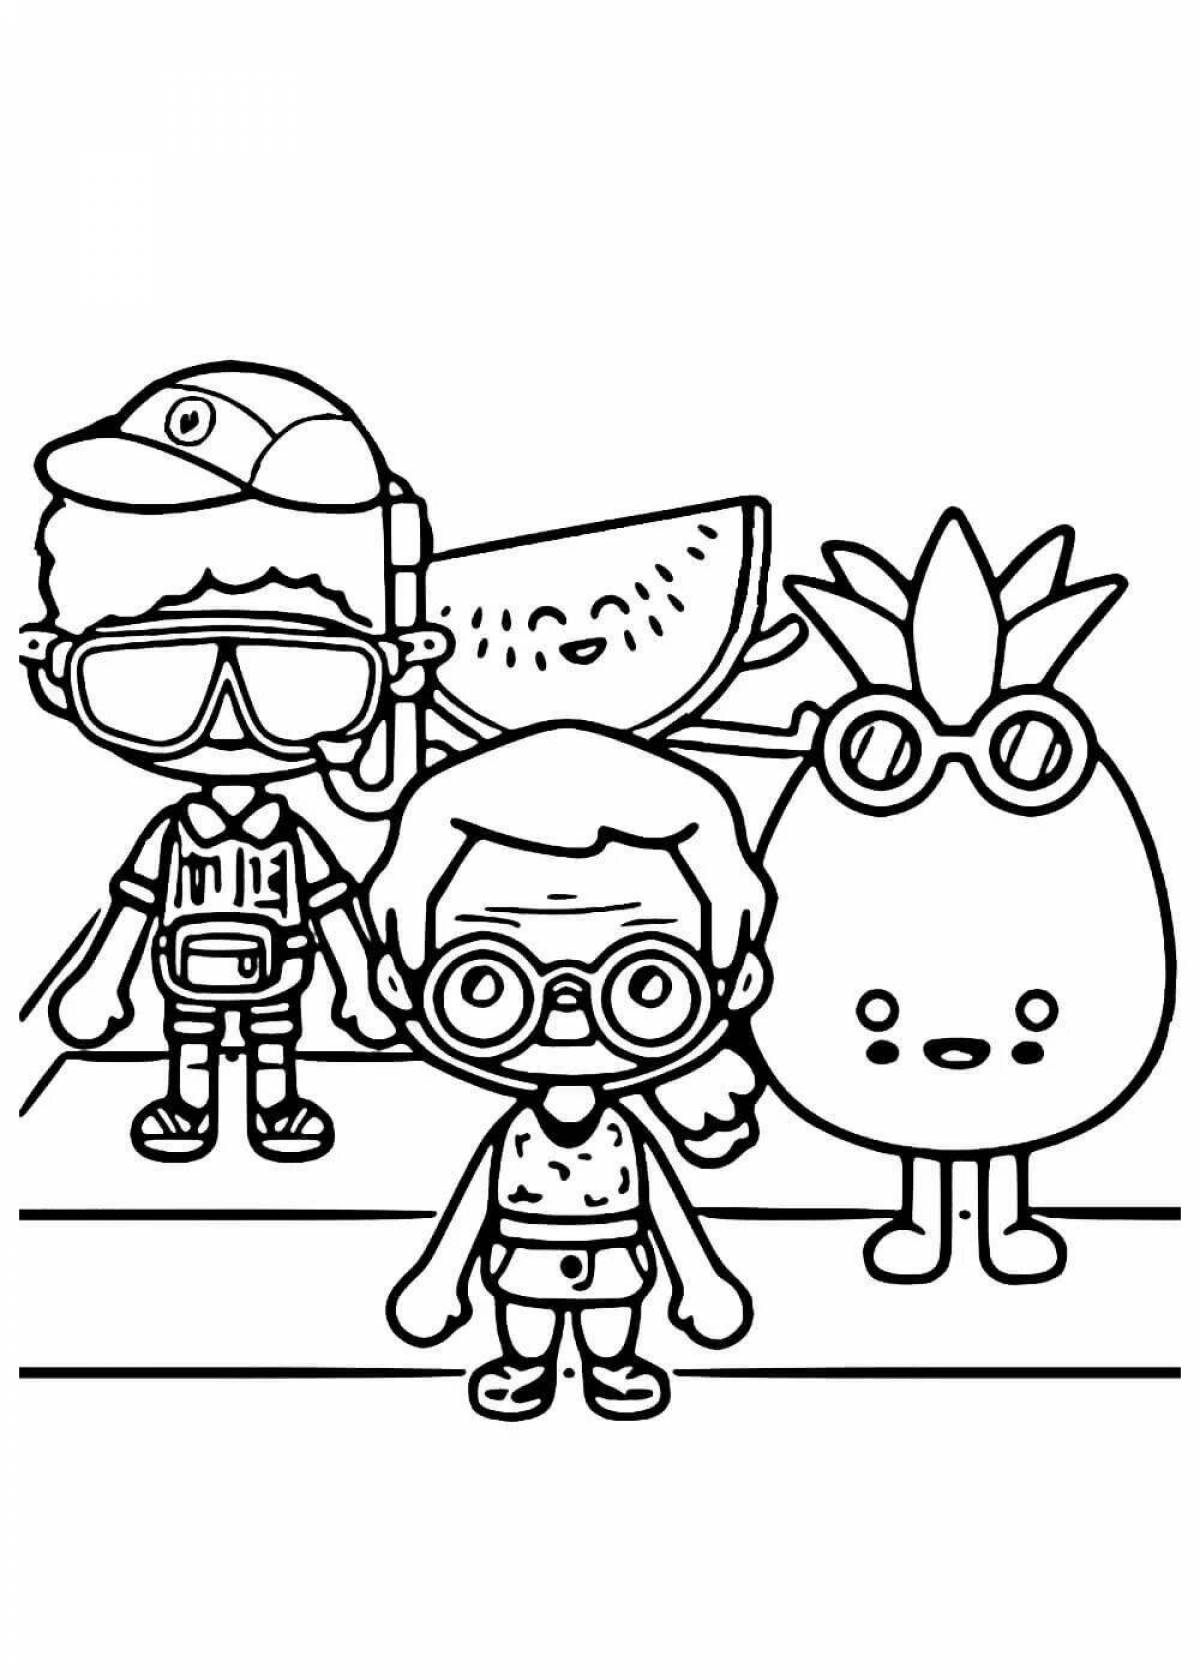 Toka boca comic coloring black and white small characters